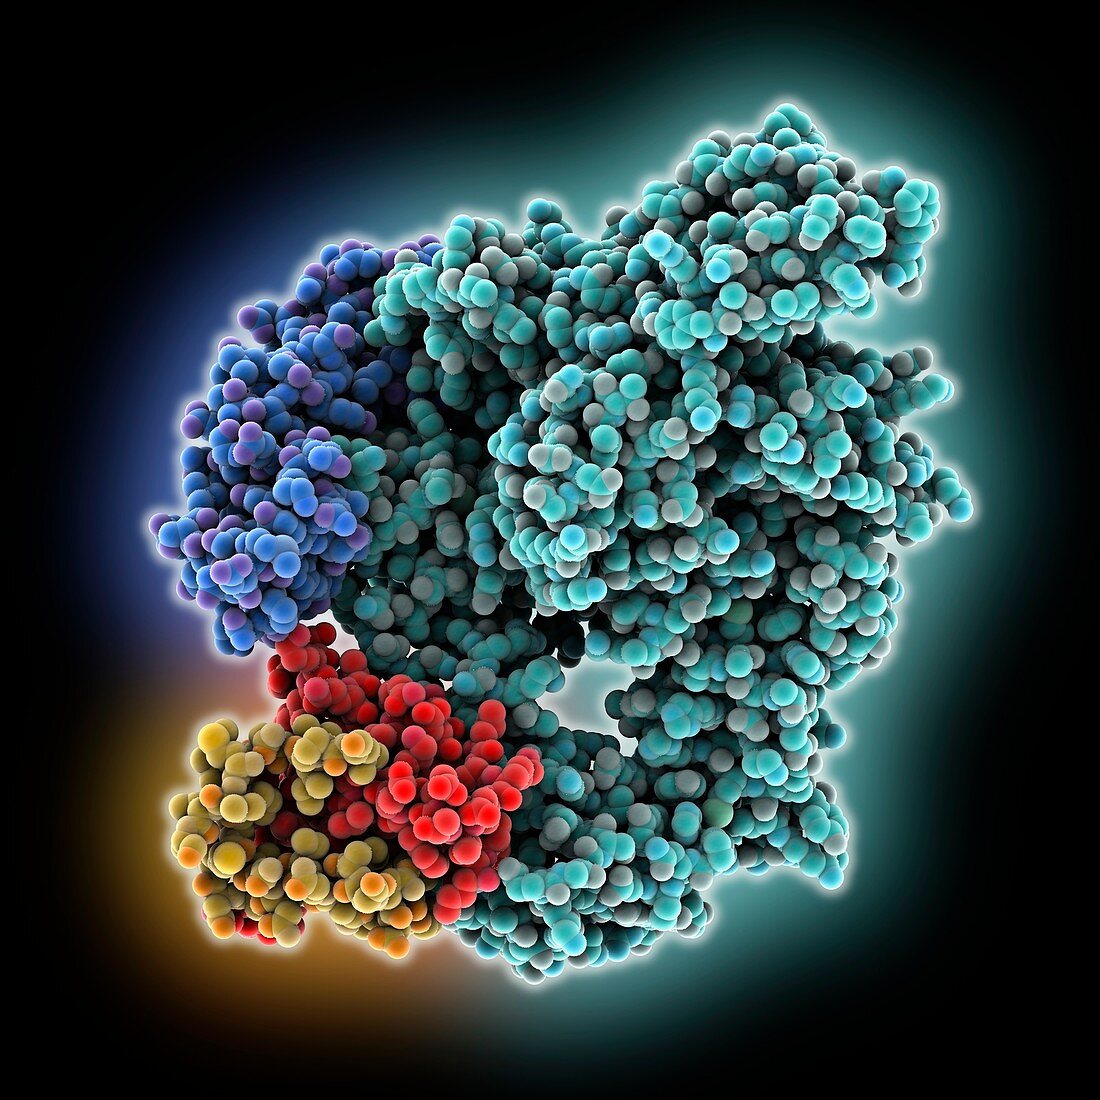 SARS-CoV-2 RNA polymerase complex, molecular model